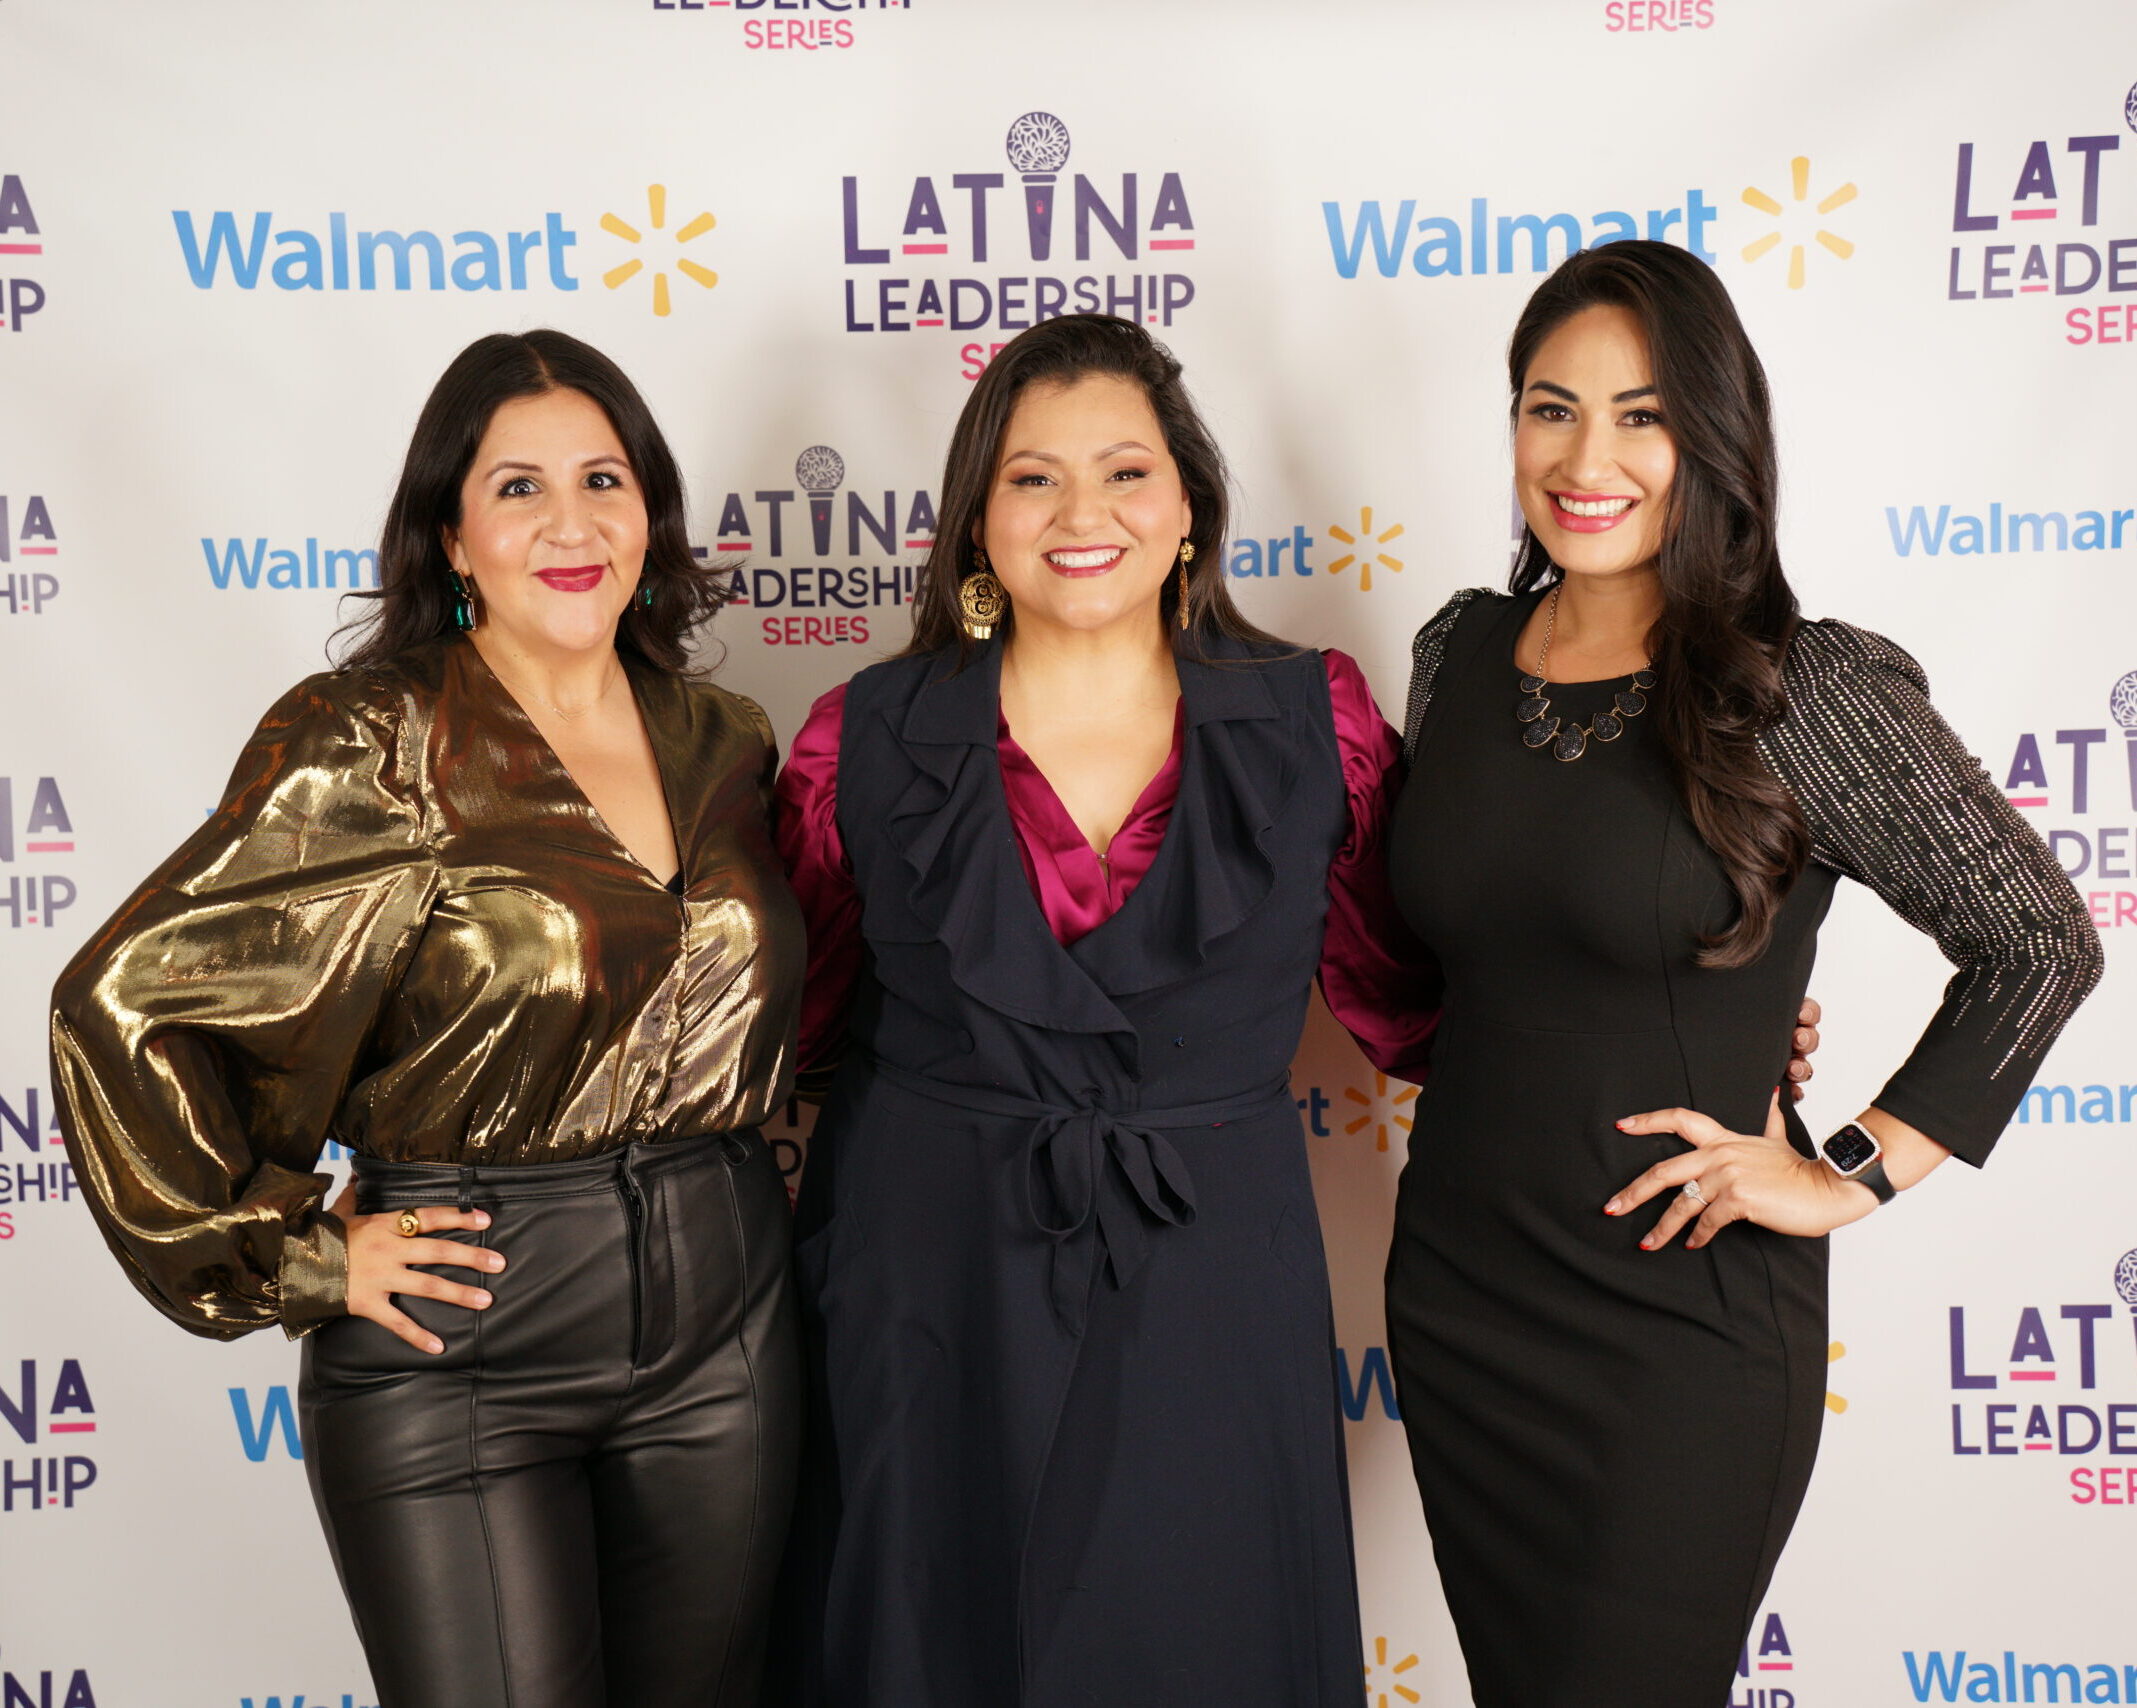 Anjelica and Latina leaders